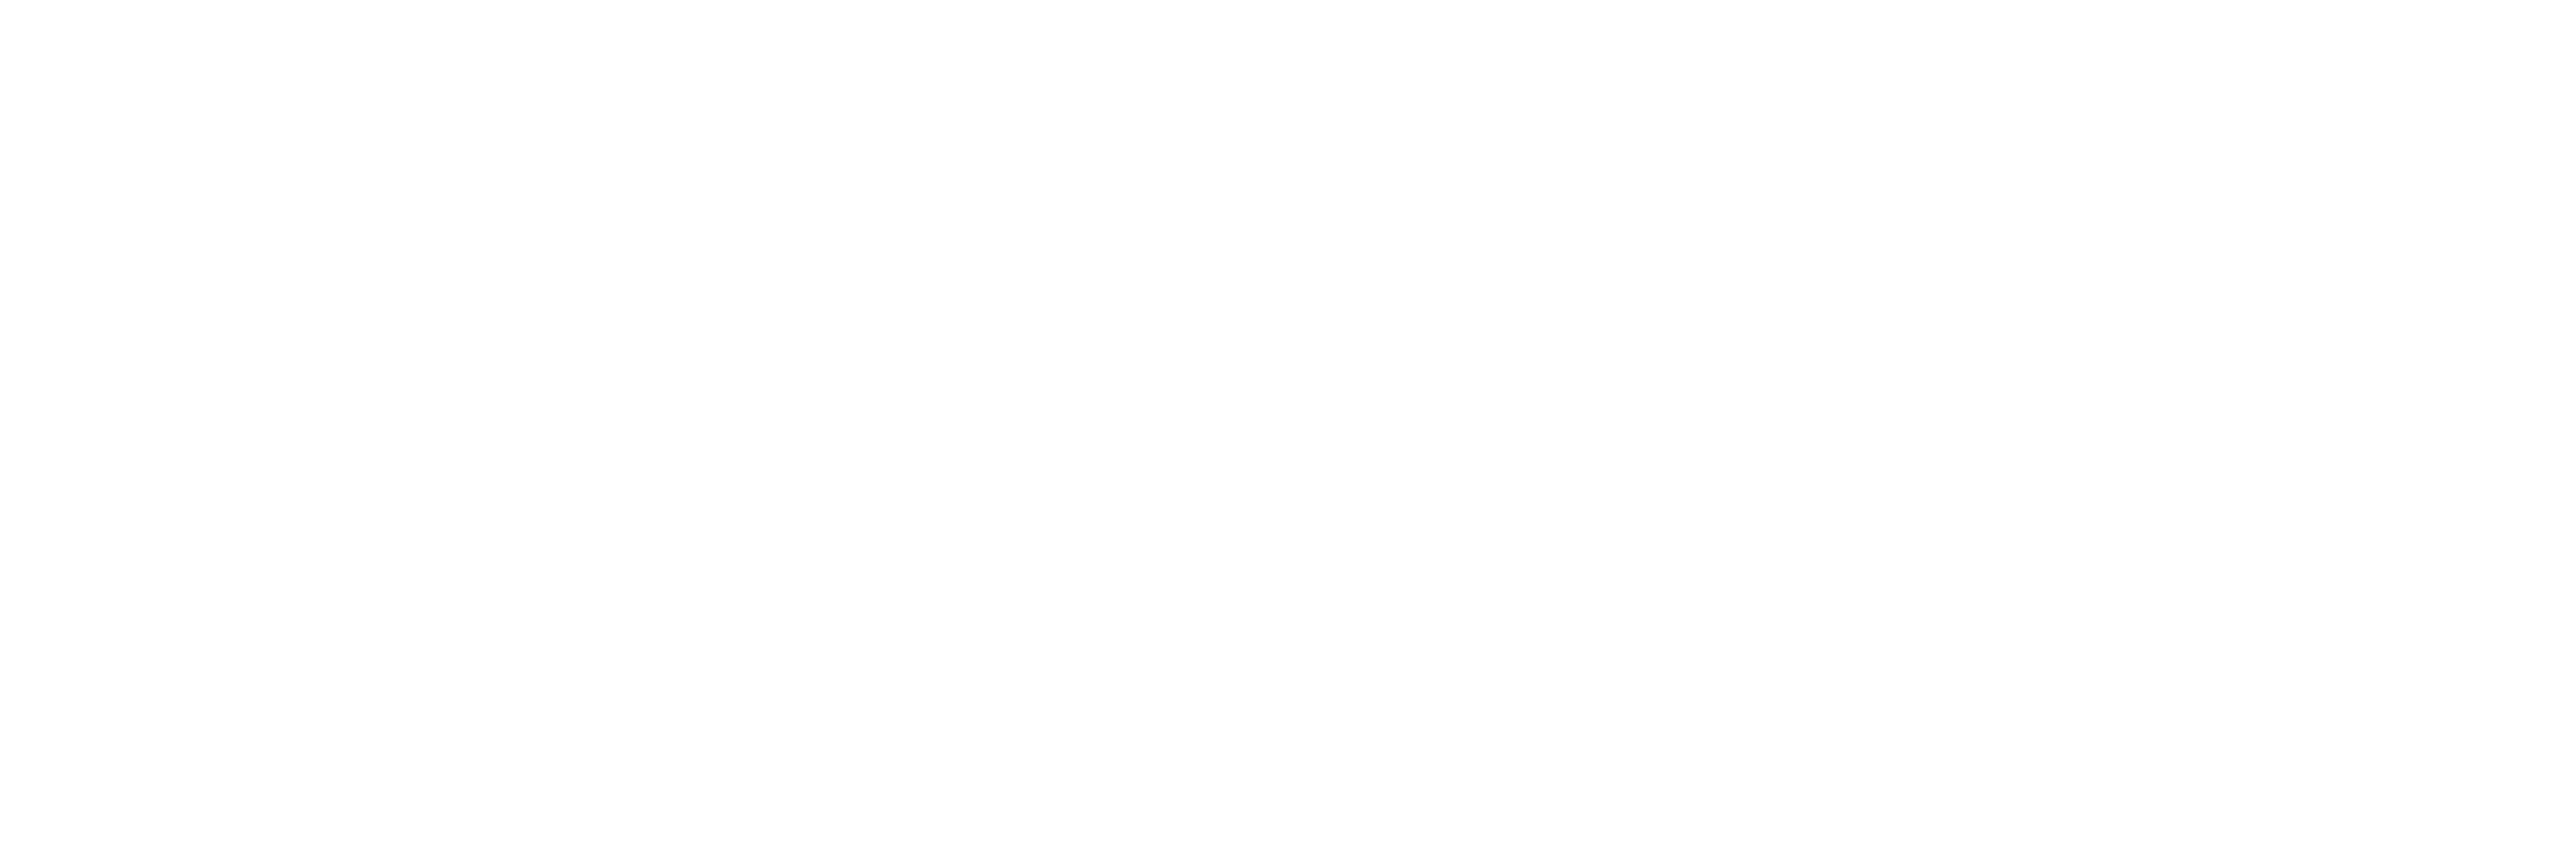 Rissai Valley Property Logo